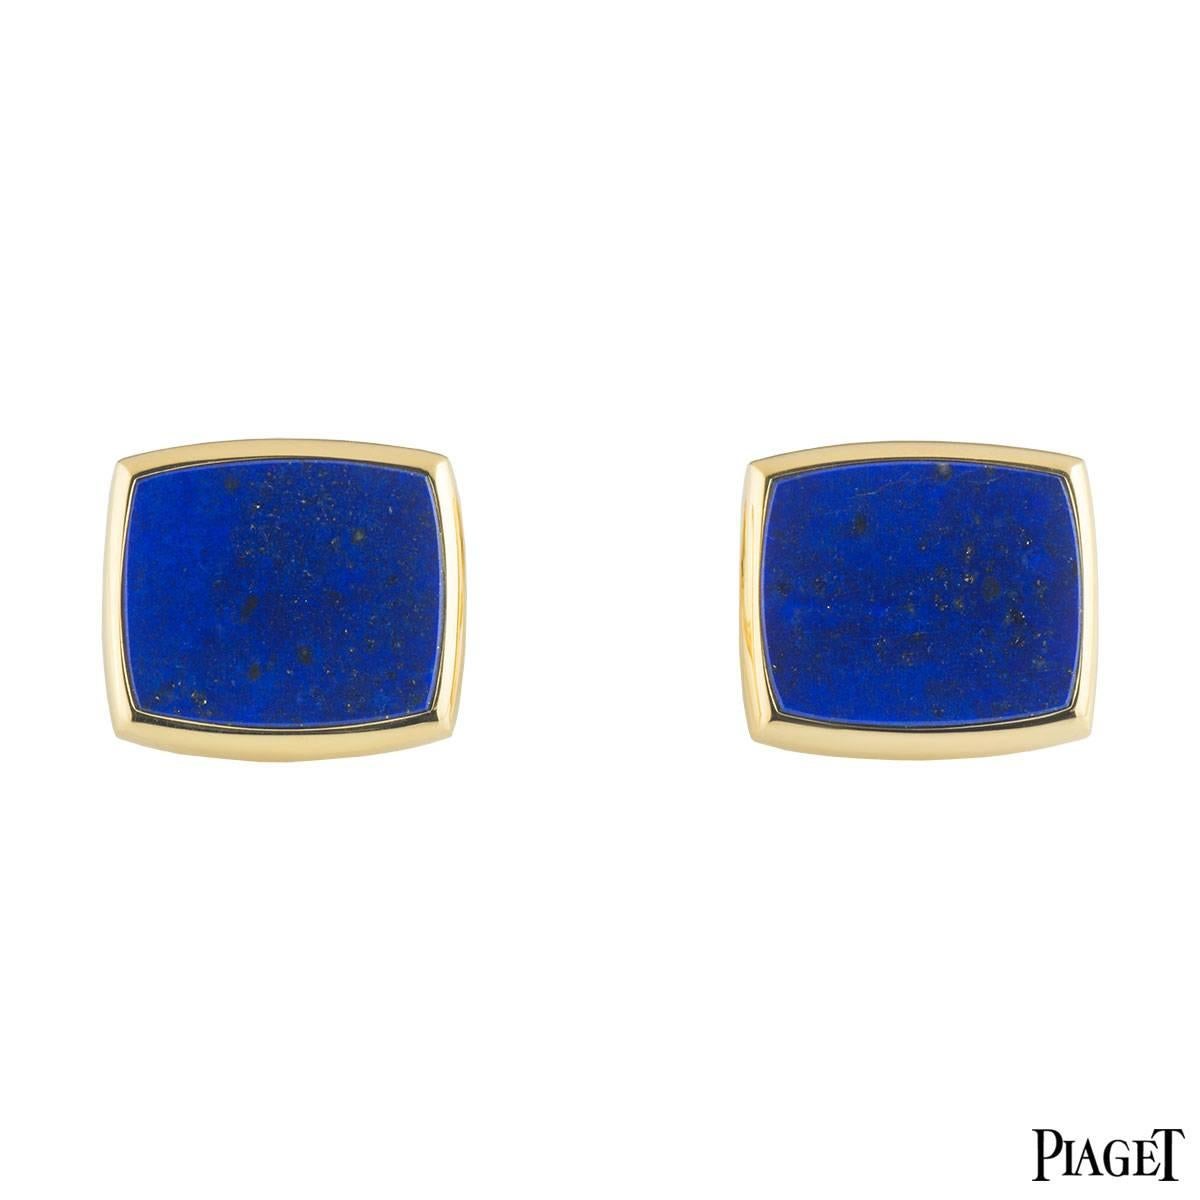 Piaget Lapis Lazuli Gold Cufflinks